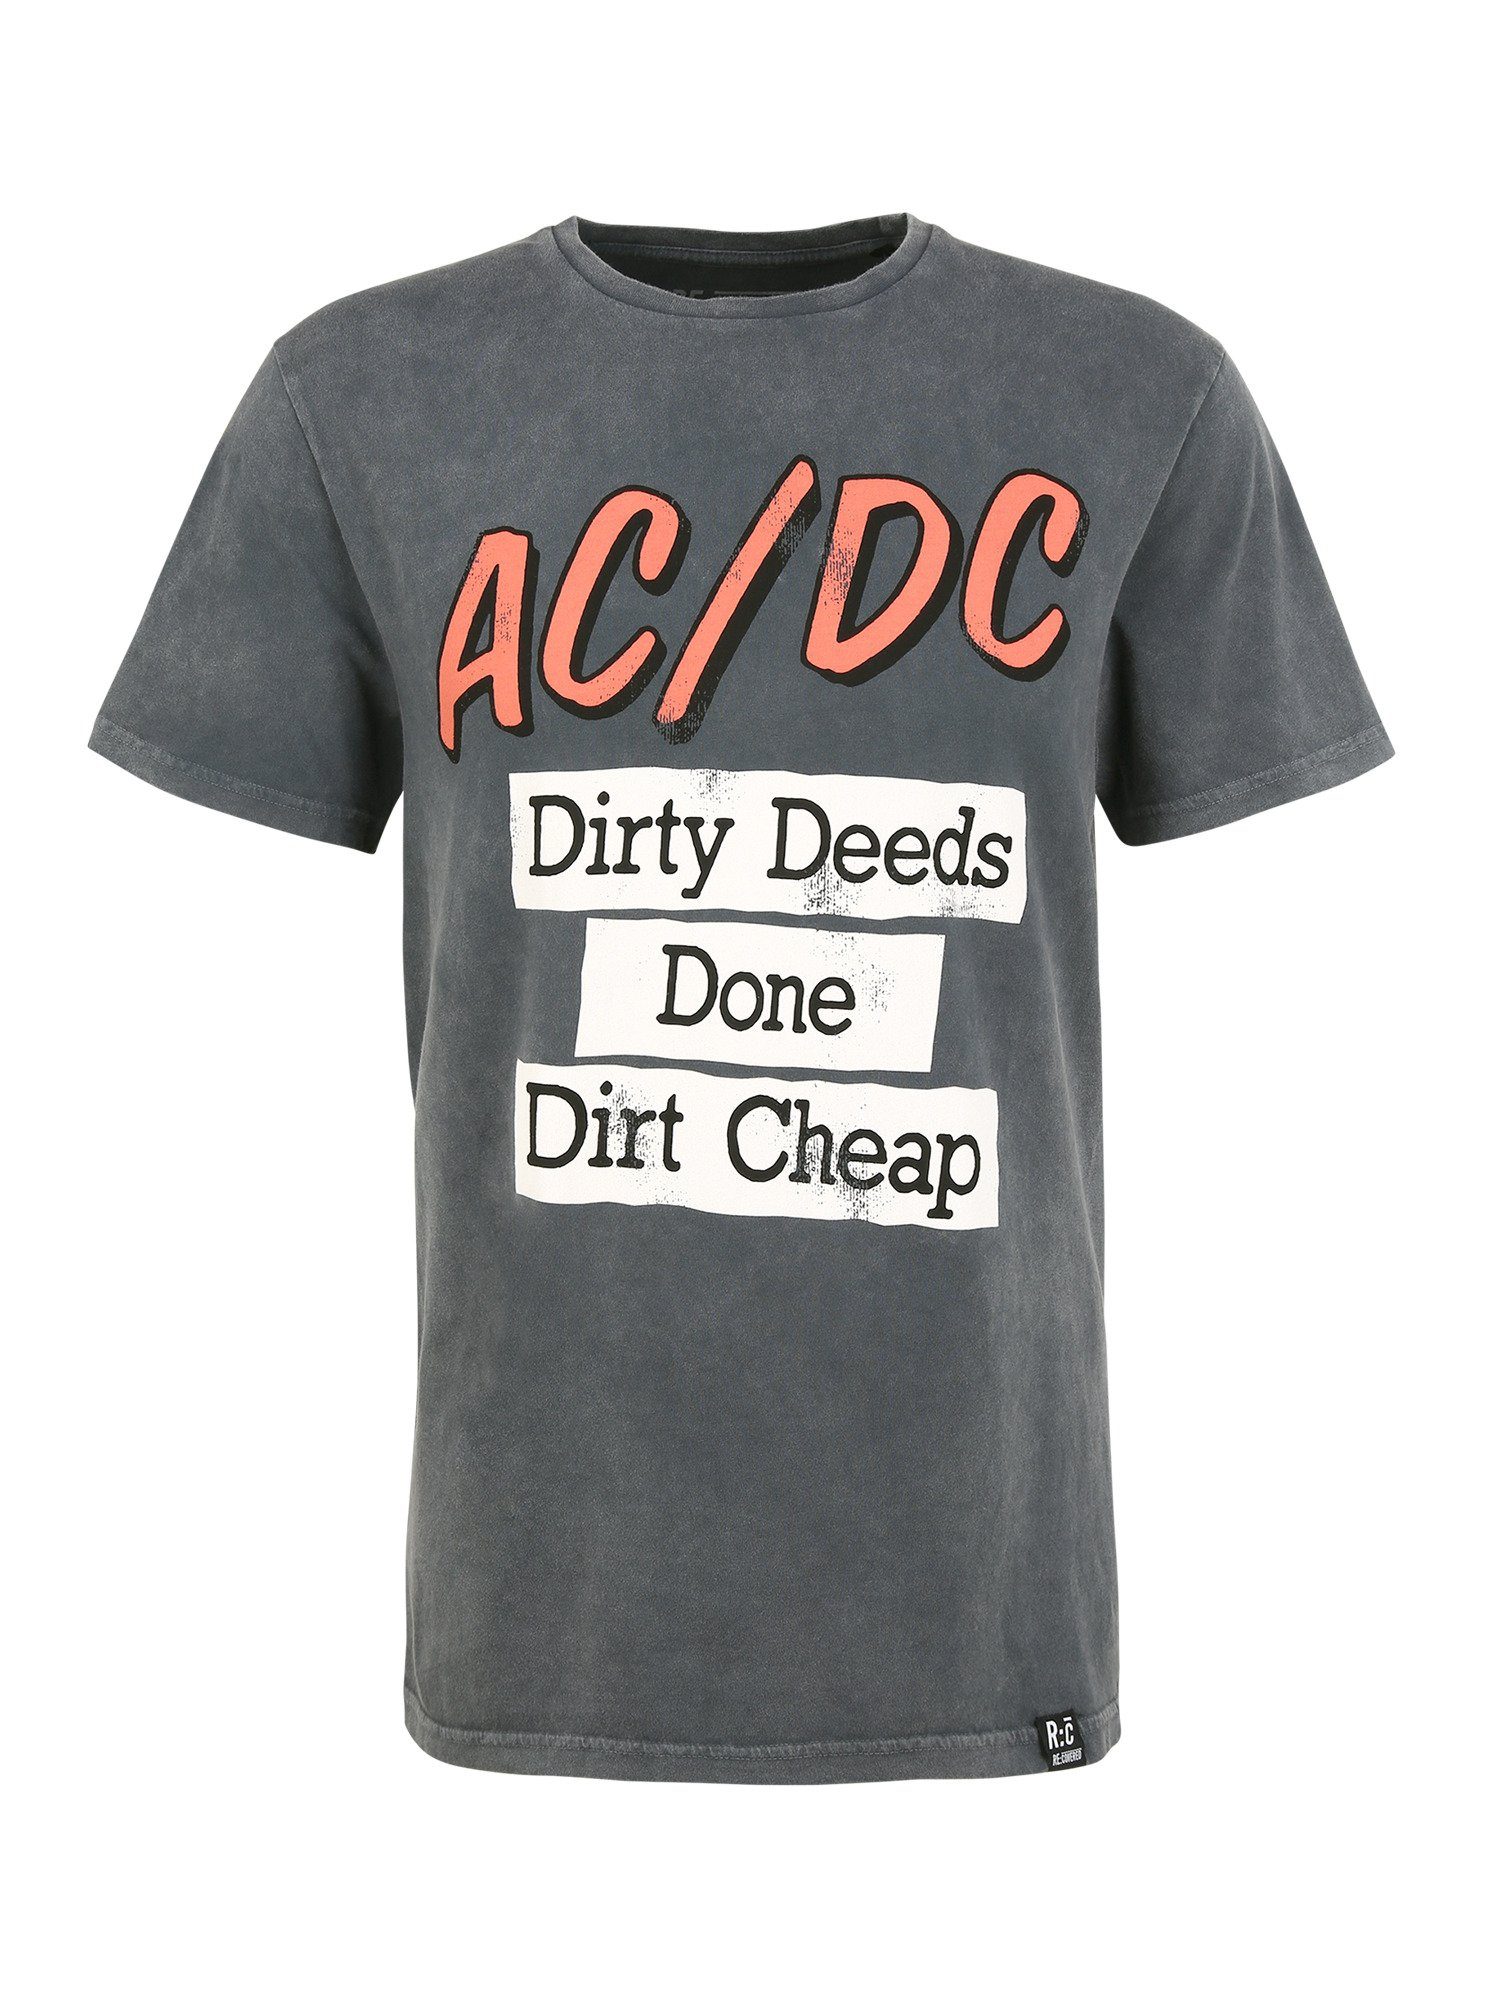 Deeds Dirty ACDC zertifizierte T-Shirt Cheap Done GOTS Washed Grey Recovered Bio-Baumwolle